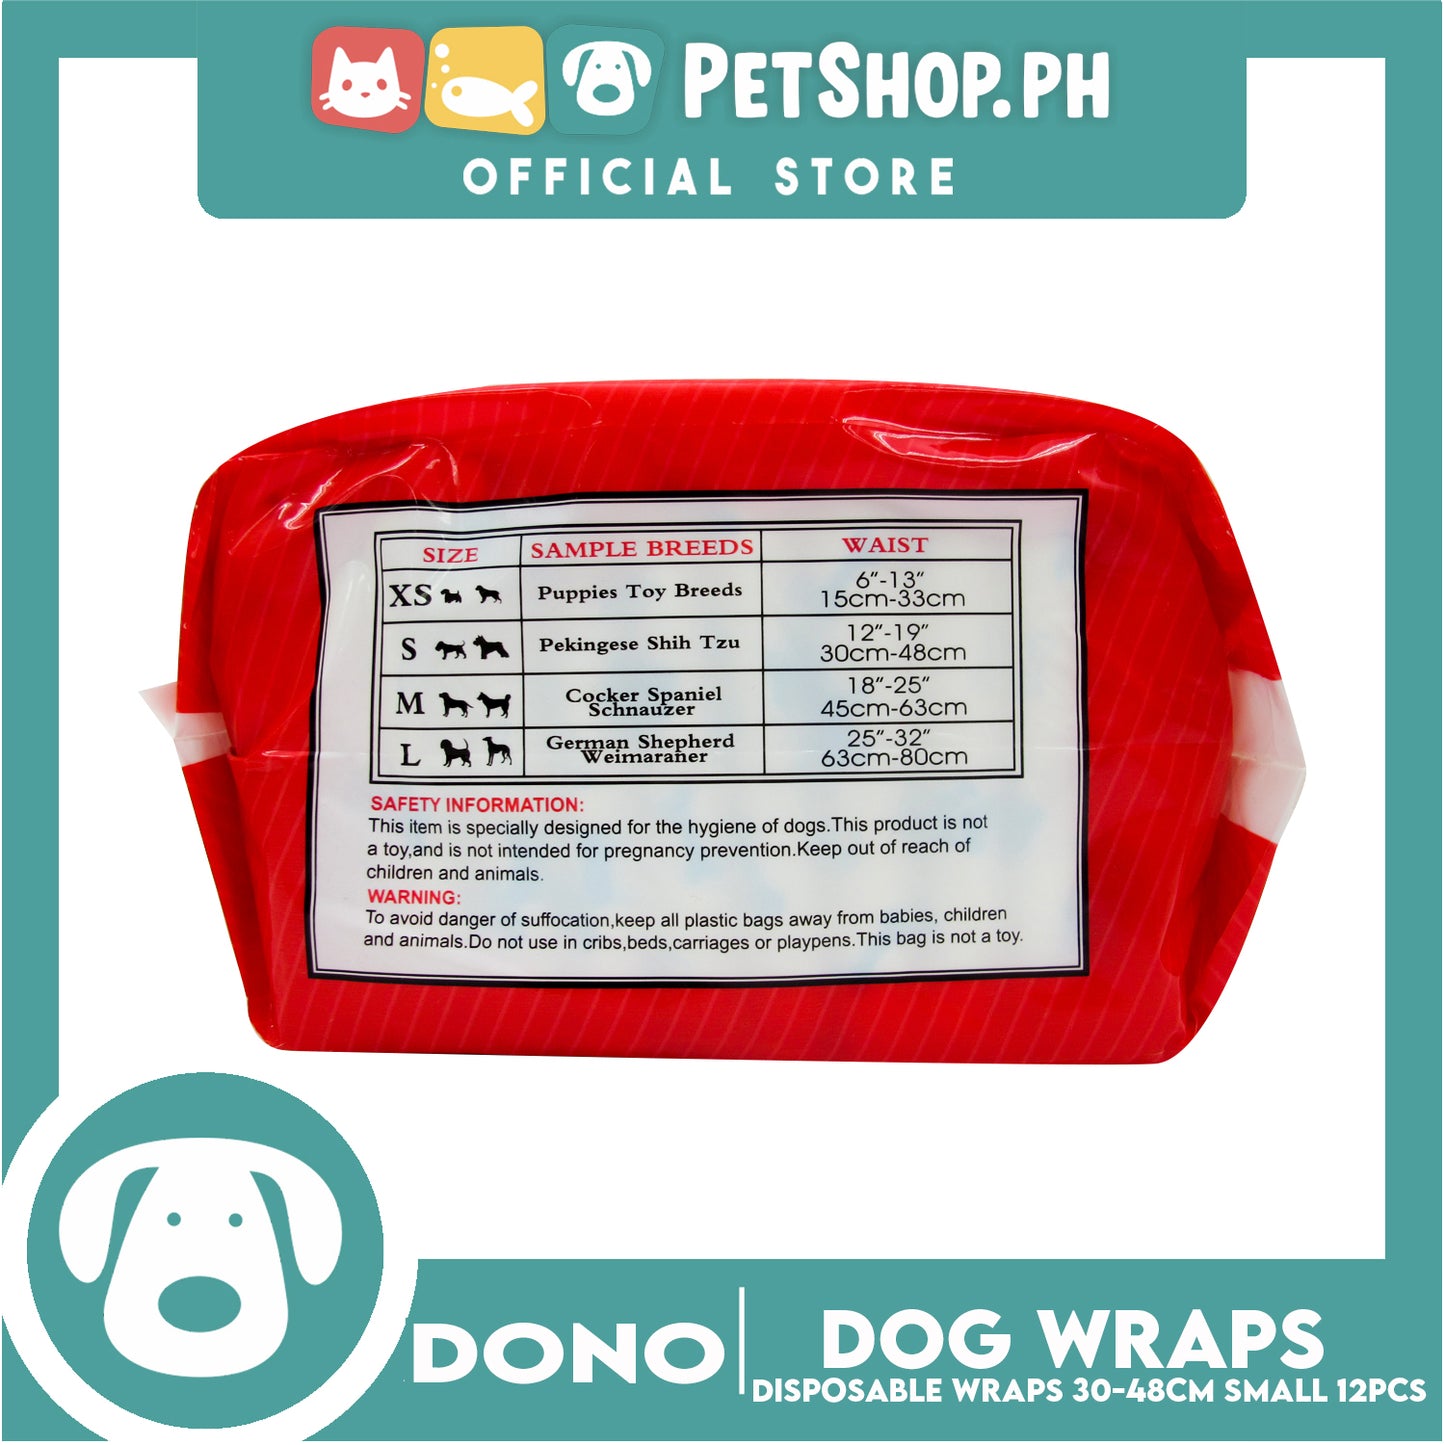 Dono Disposable Male Dog Wrap (Small) Set of 12pcs